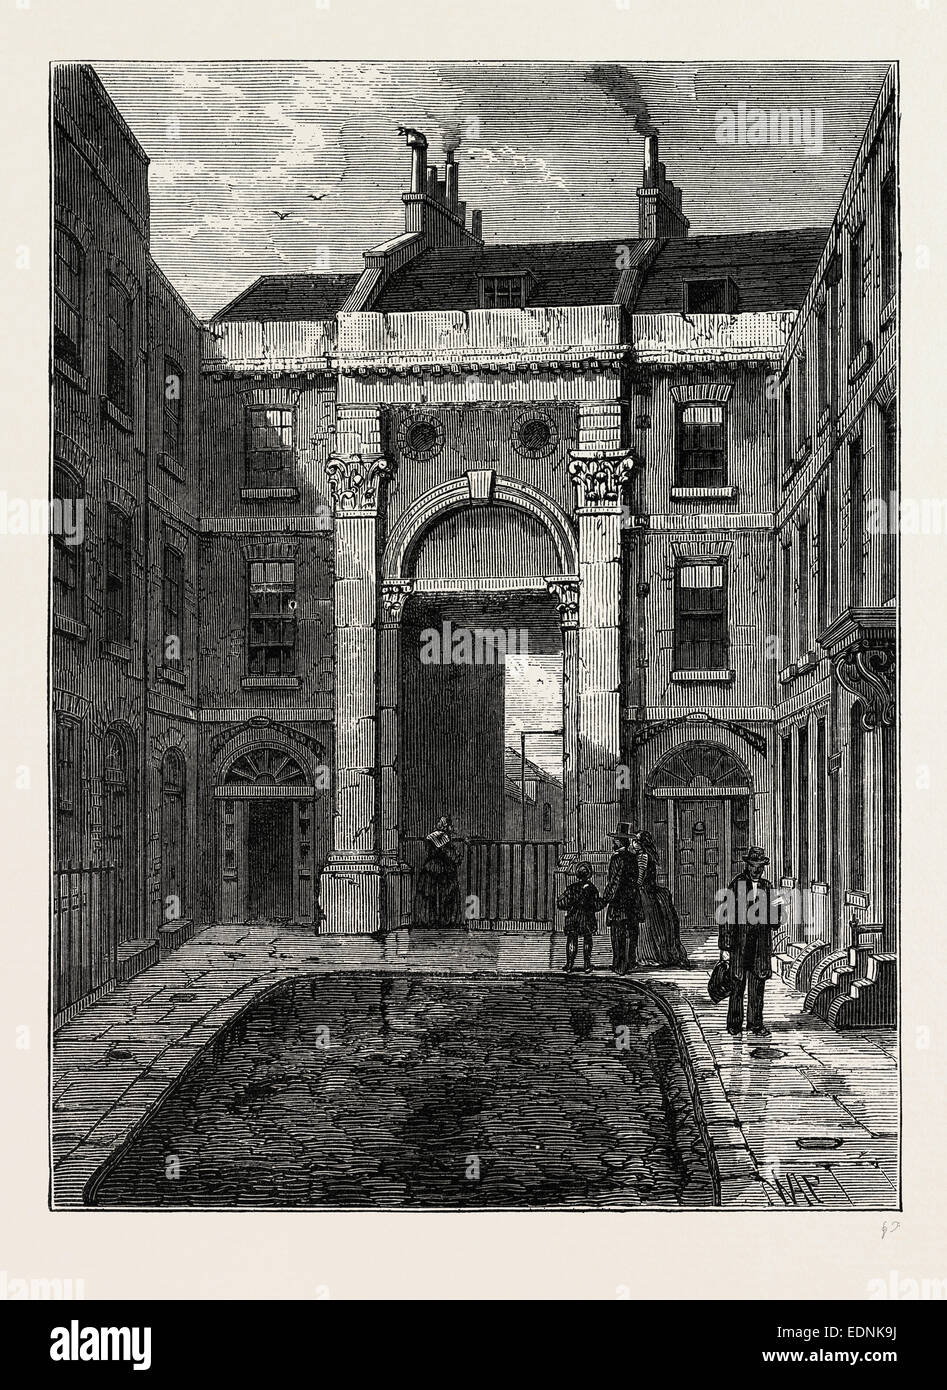 ESSEX WATER GATE, ESSEX STREET, STRAND. London, UK, 19th century engraving Stock Photo